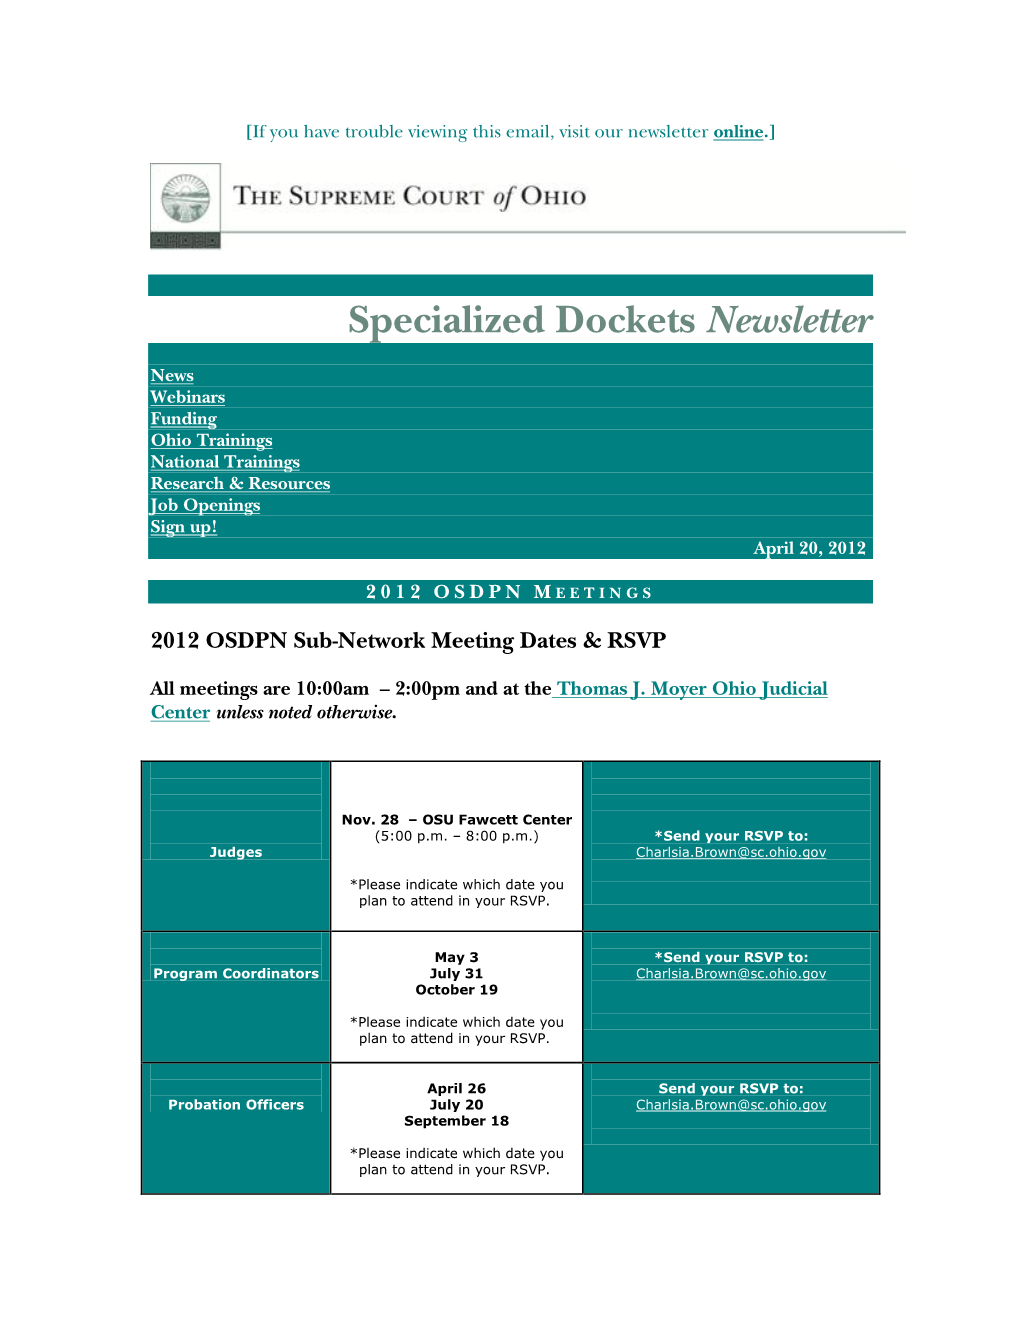 Specialized Dockets Newsletter